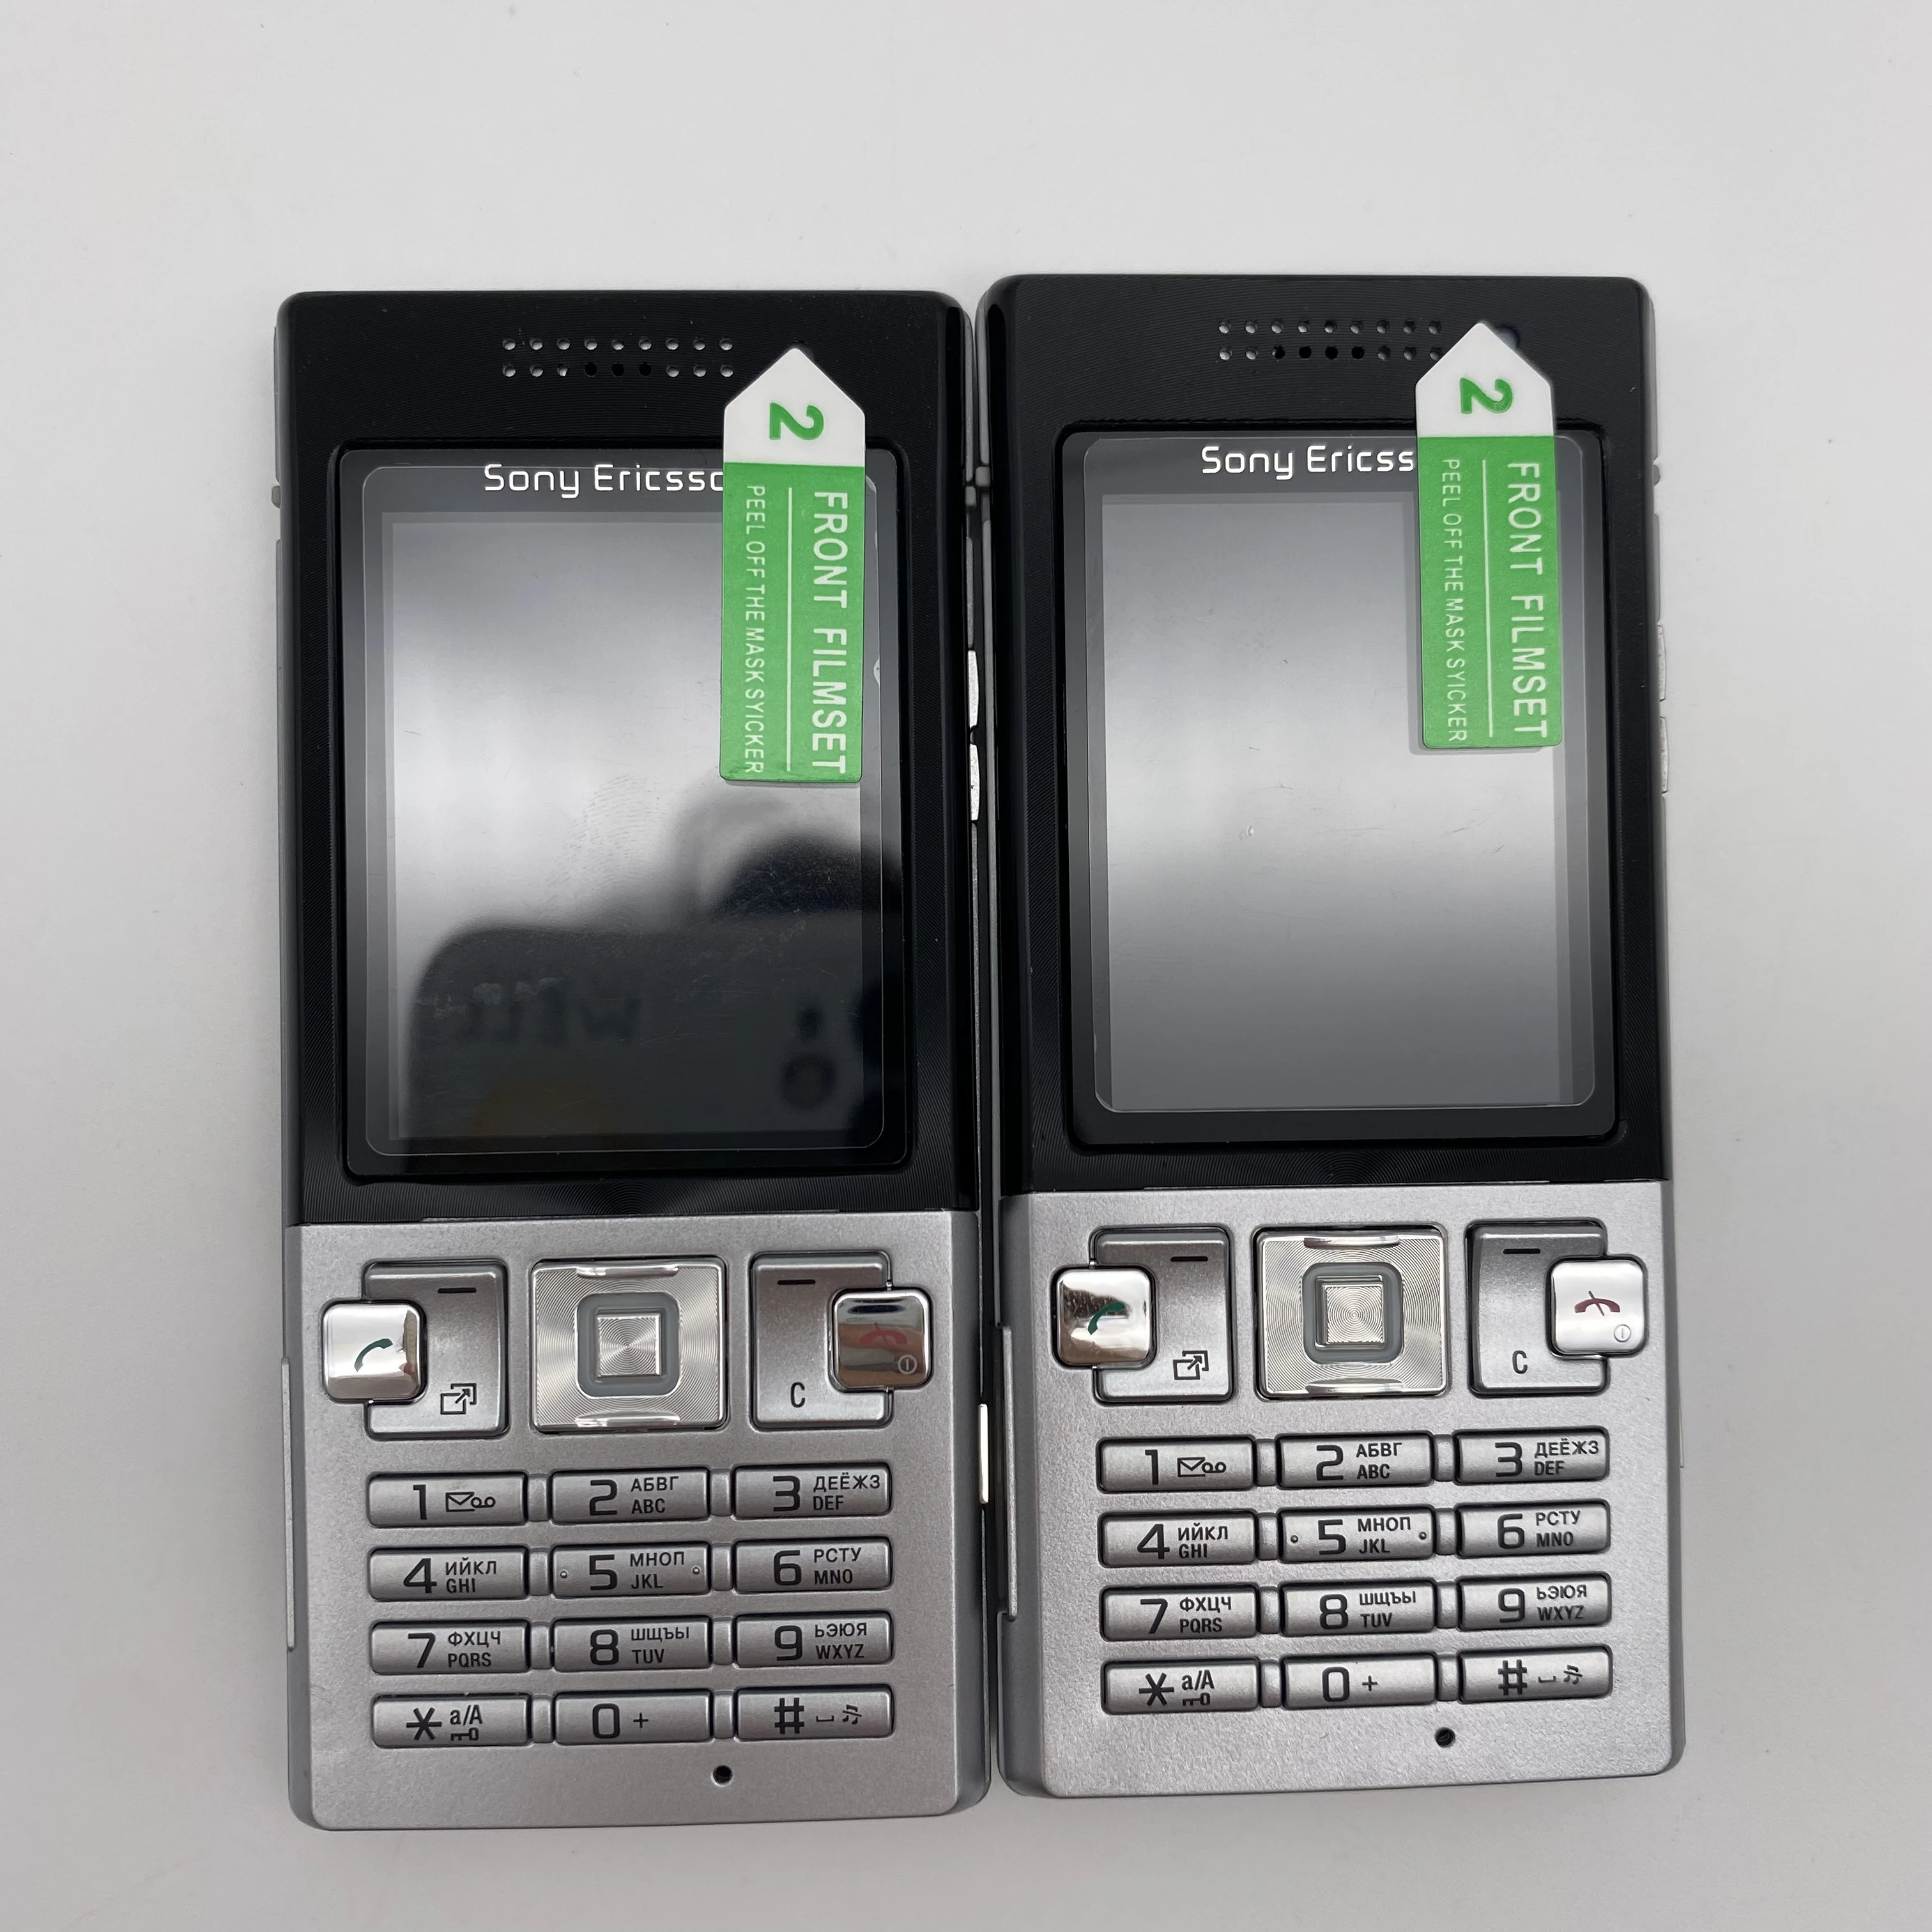 sony ericsson t700 refurbised original unlocked mobile phone 3g java fm unlocked cell phone free shipping free global shipping